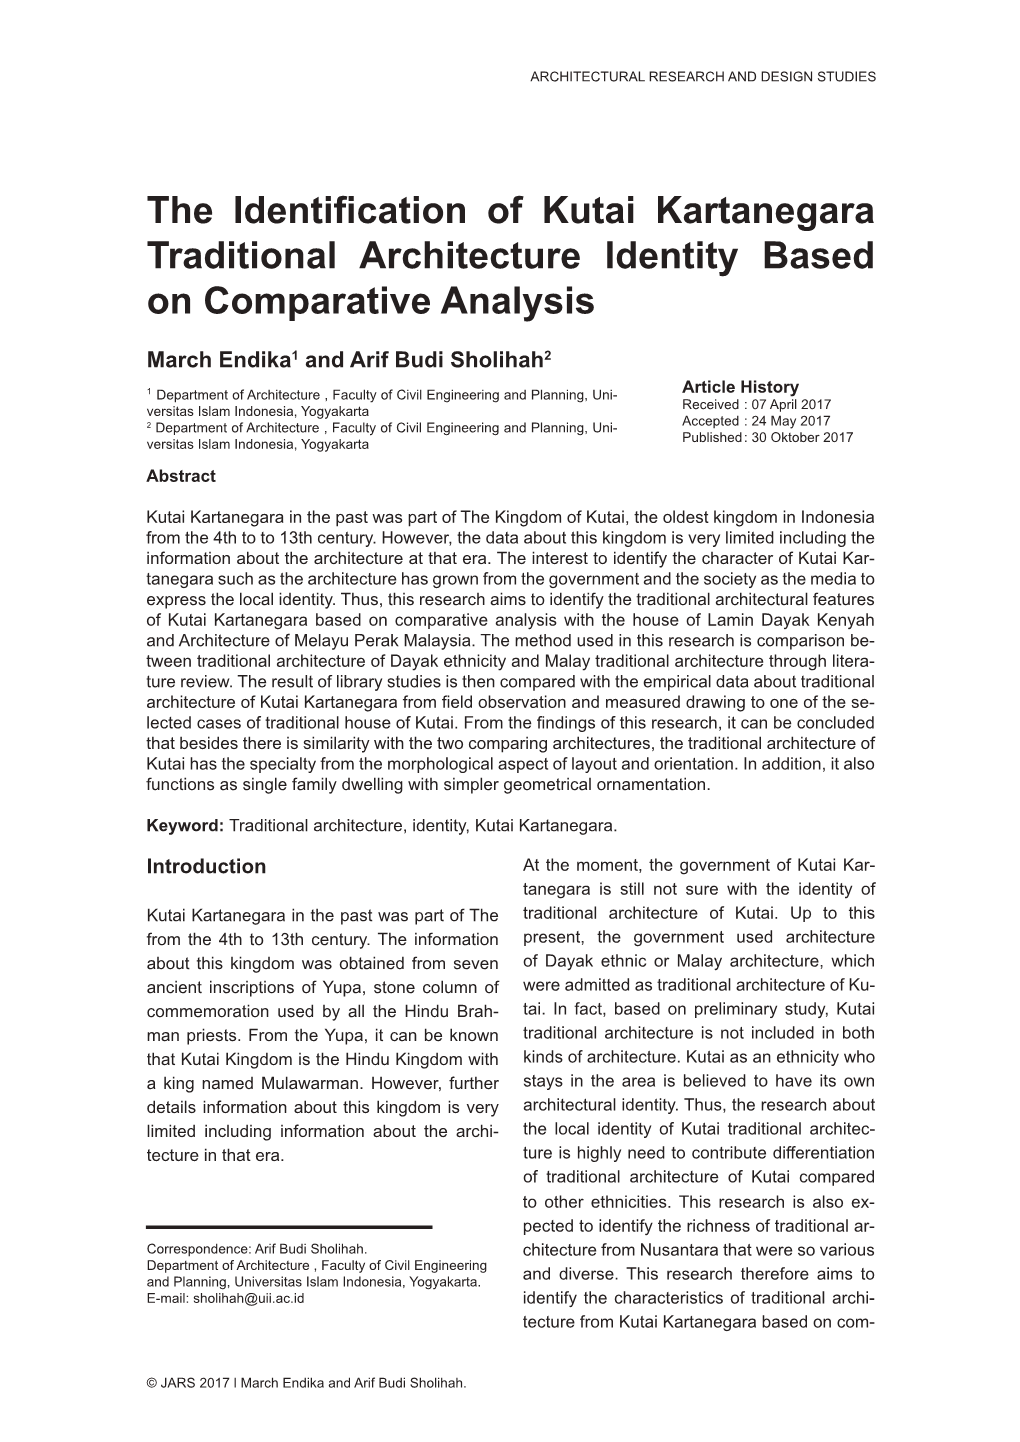 The Identification of Kutai Kartanegara Traditional Architecture Identity Based on Comparative Analysis